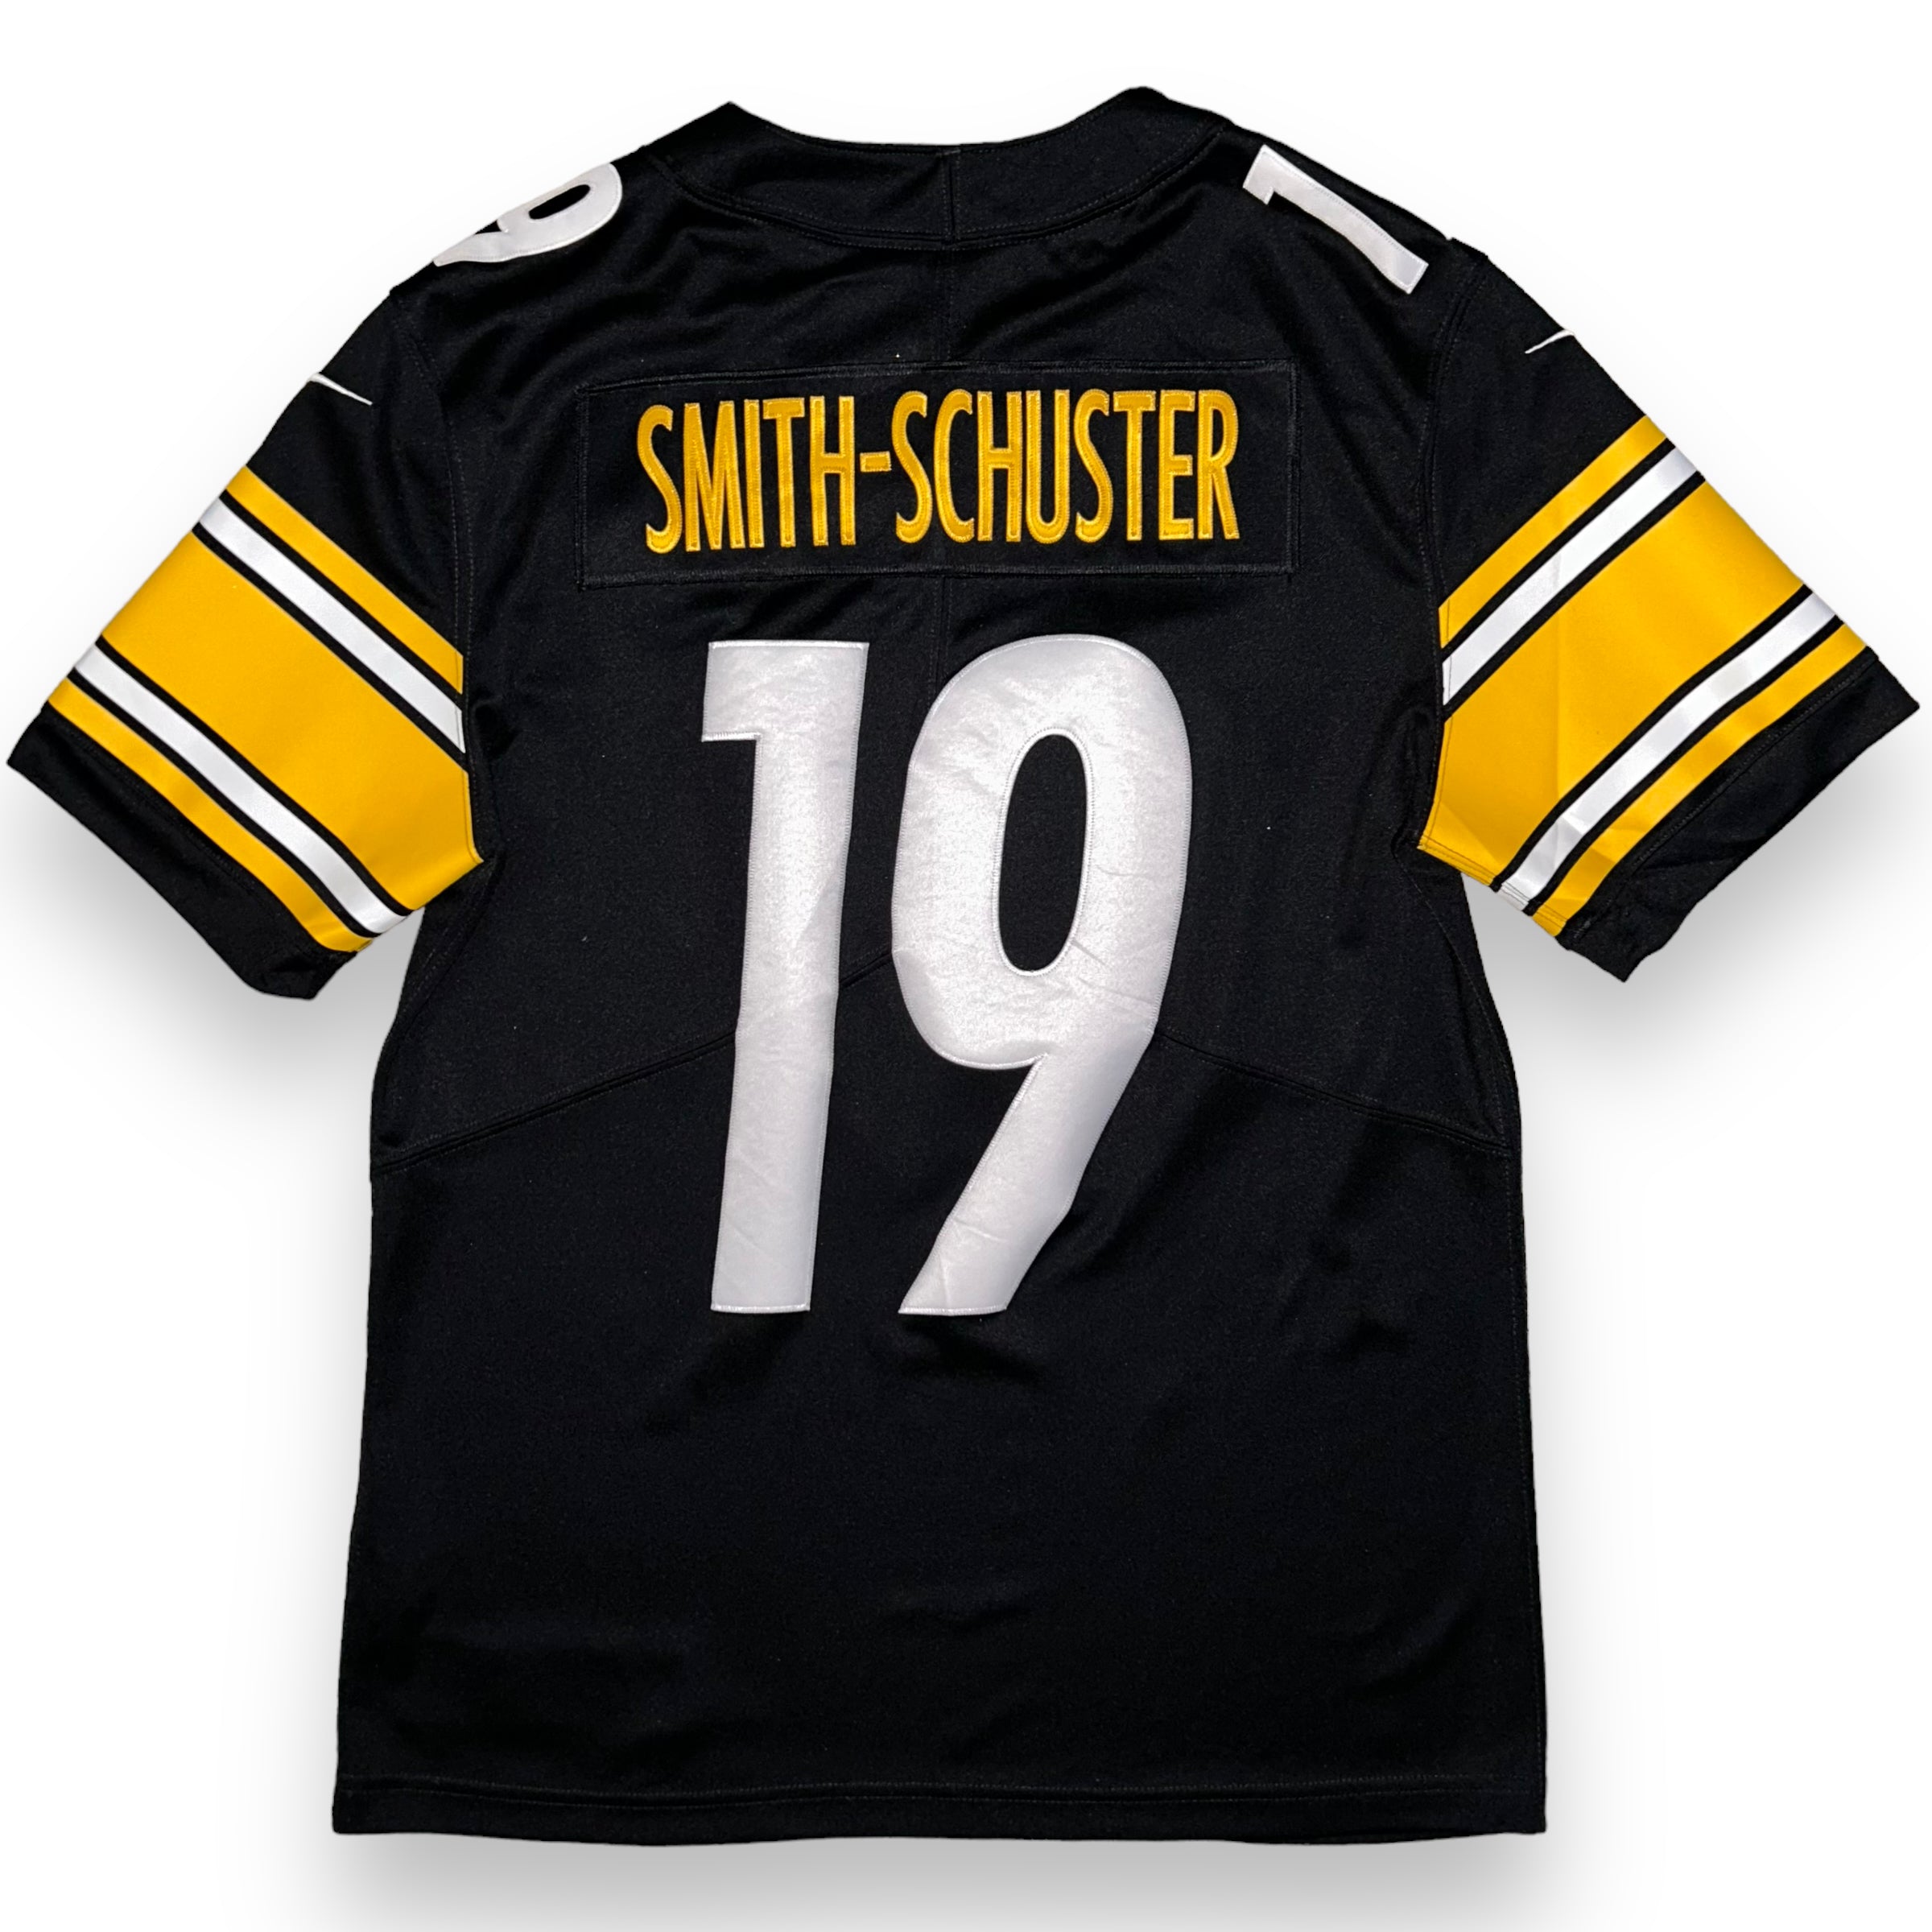 Jersey Pittsburgh Steelers NFL NIKE  (M)